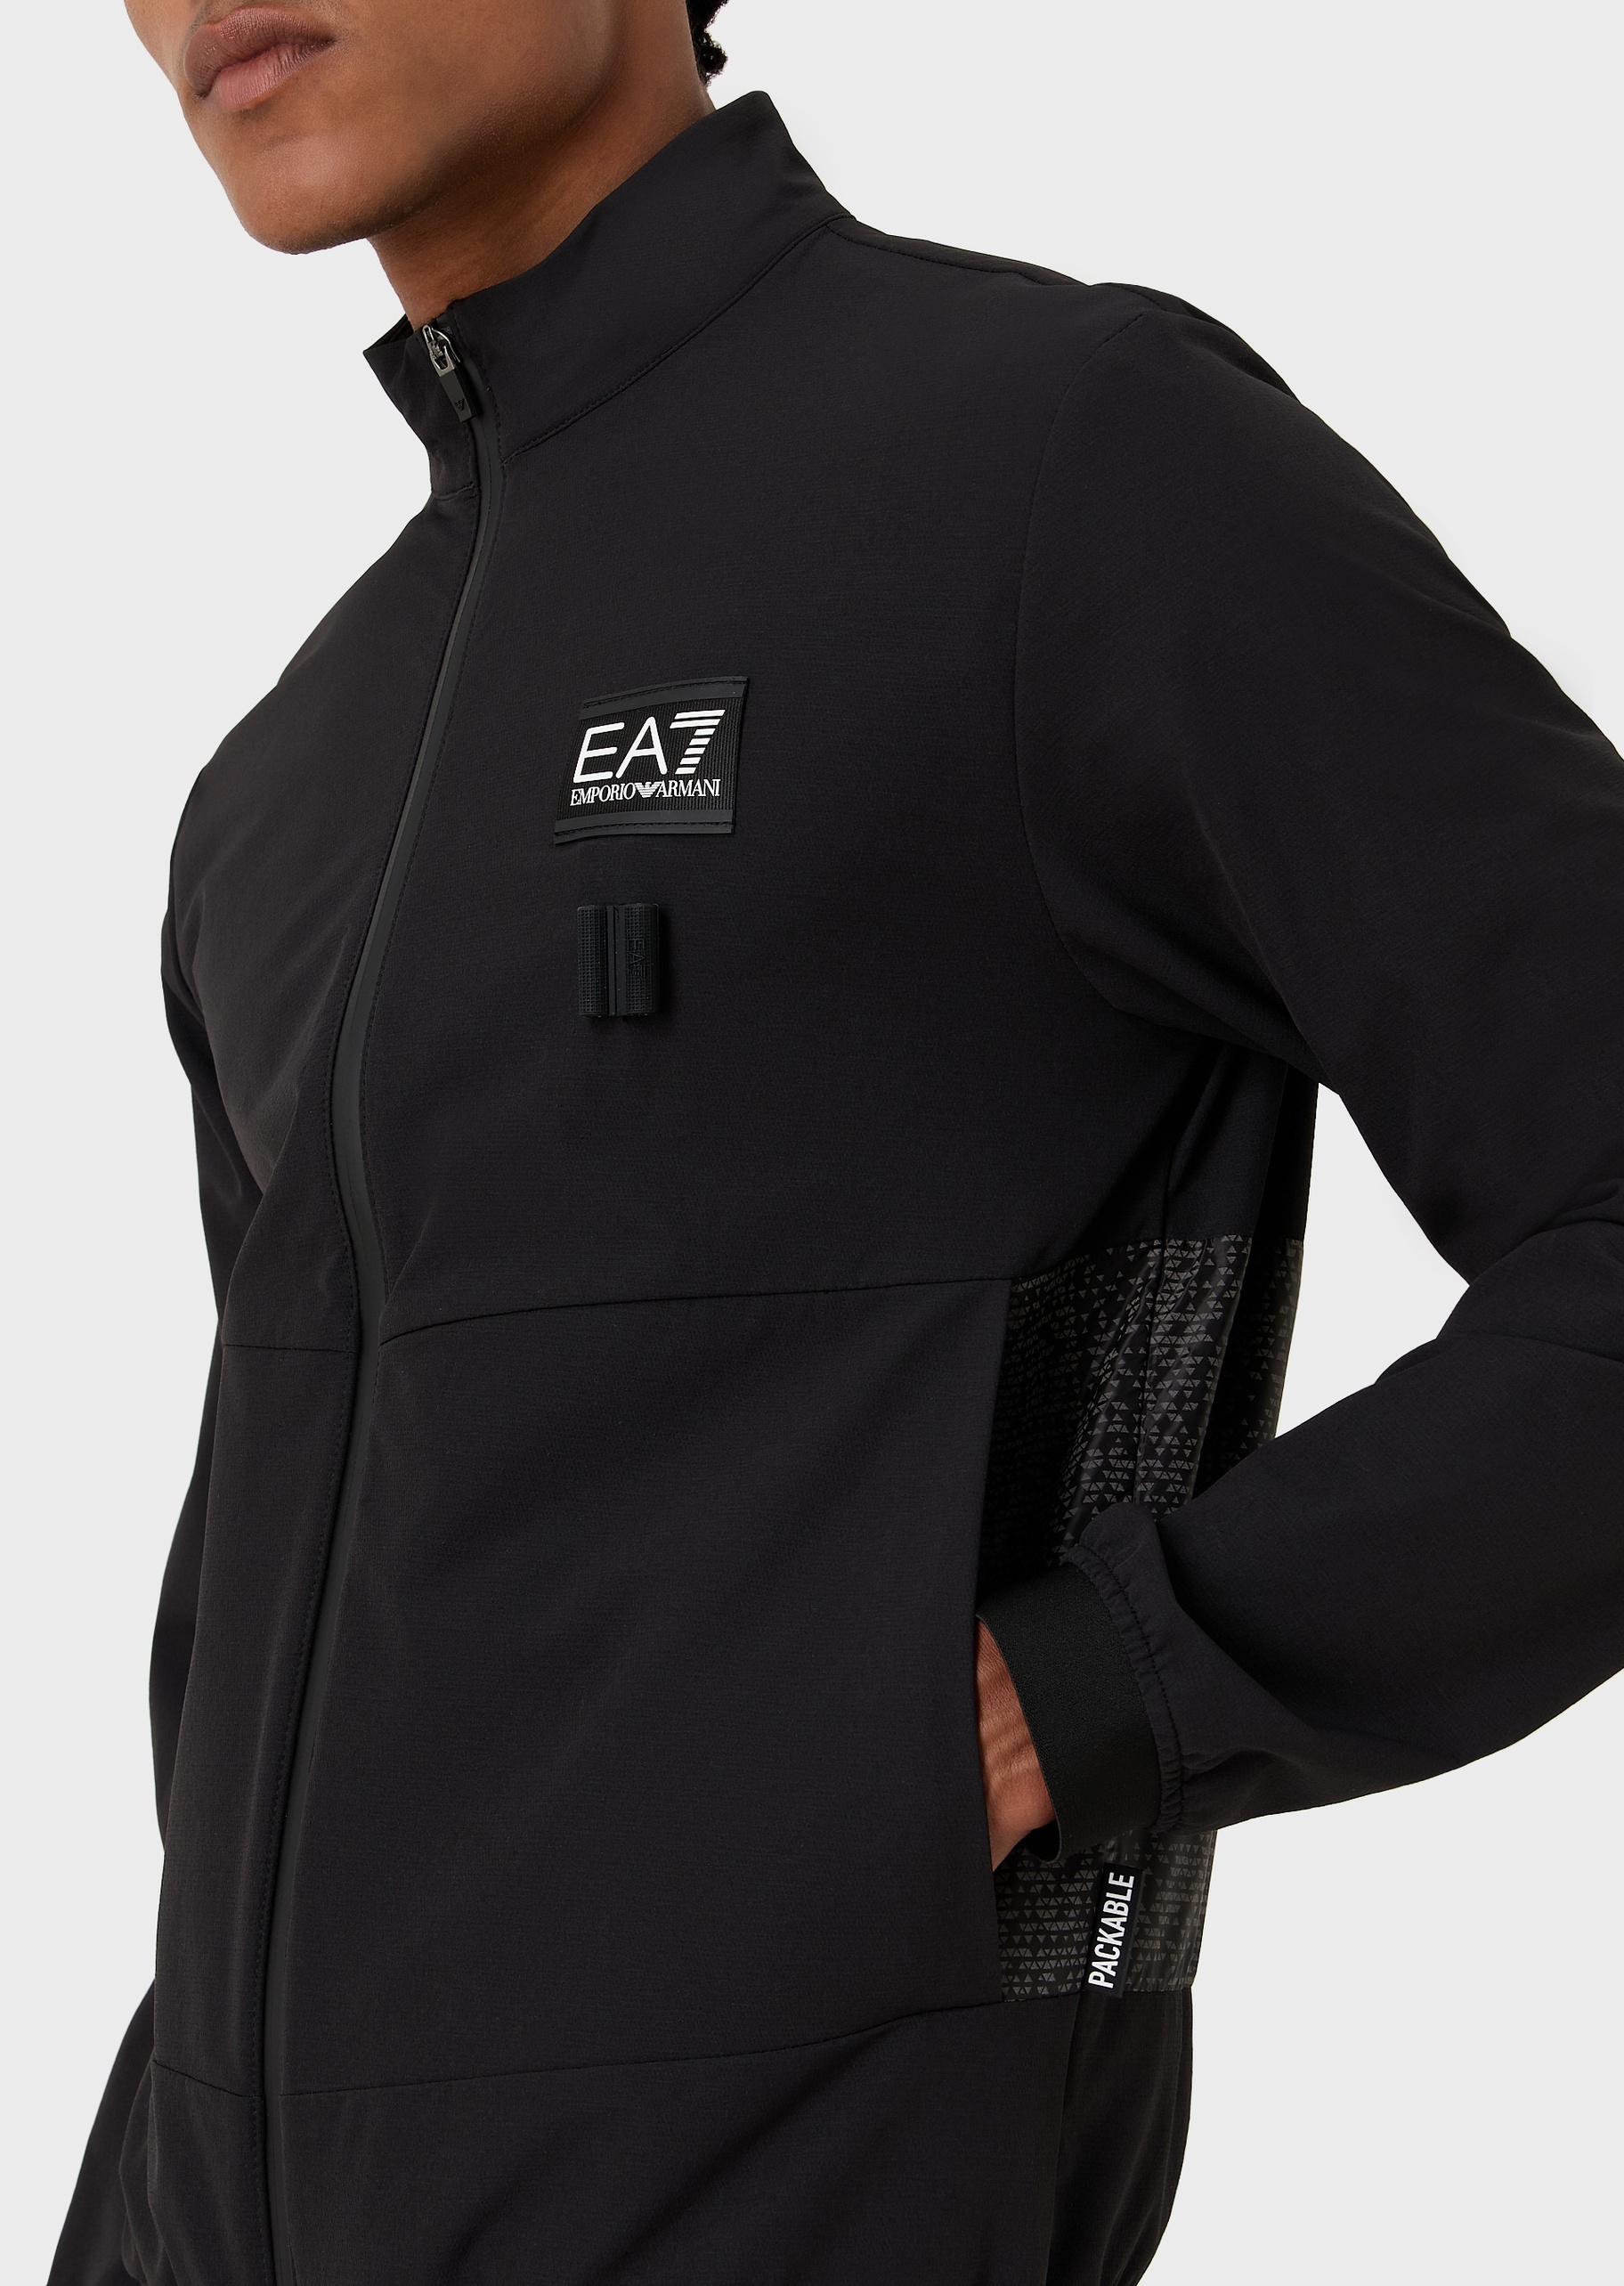 EA7 男士合身长袖立领健身训练飞行员夹克外套